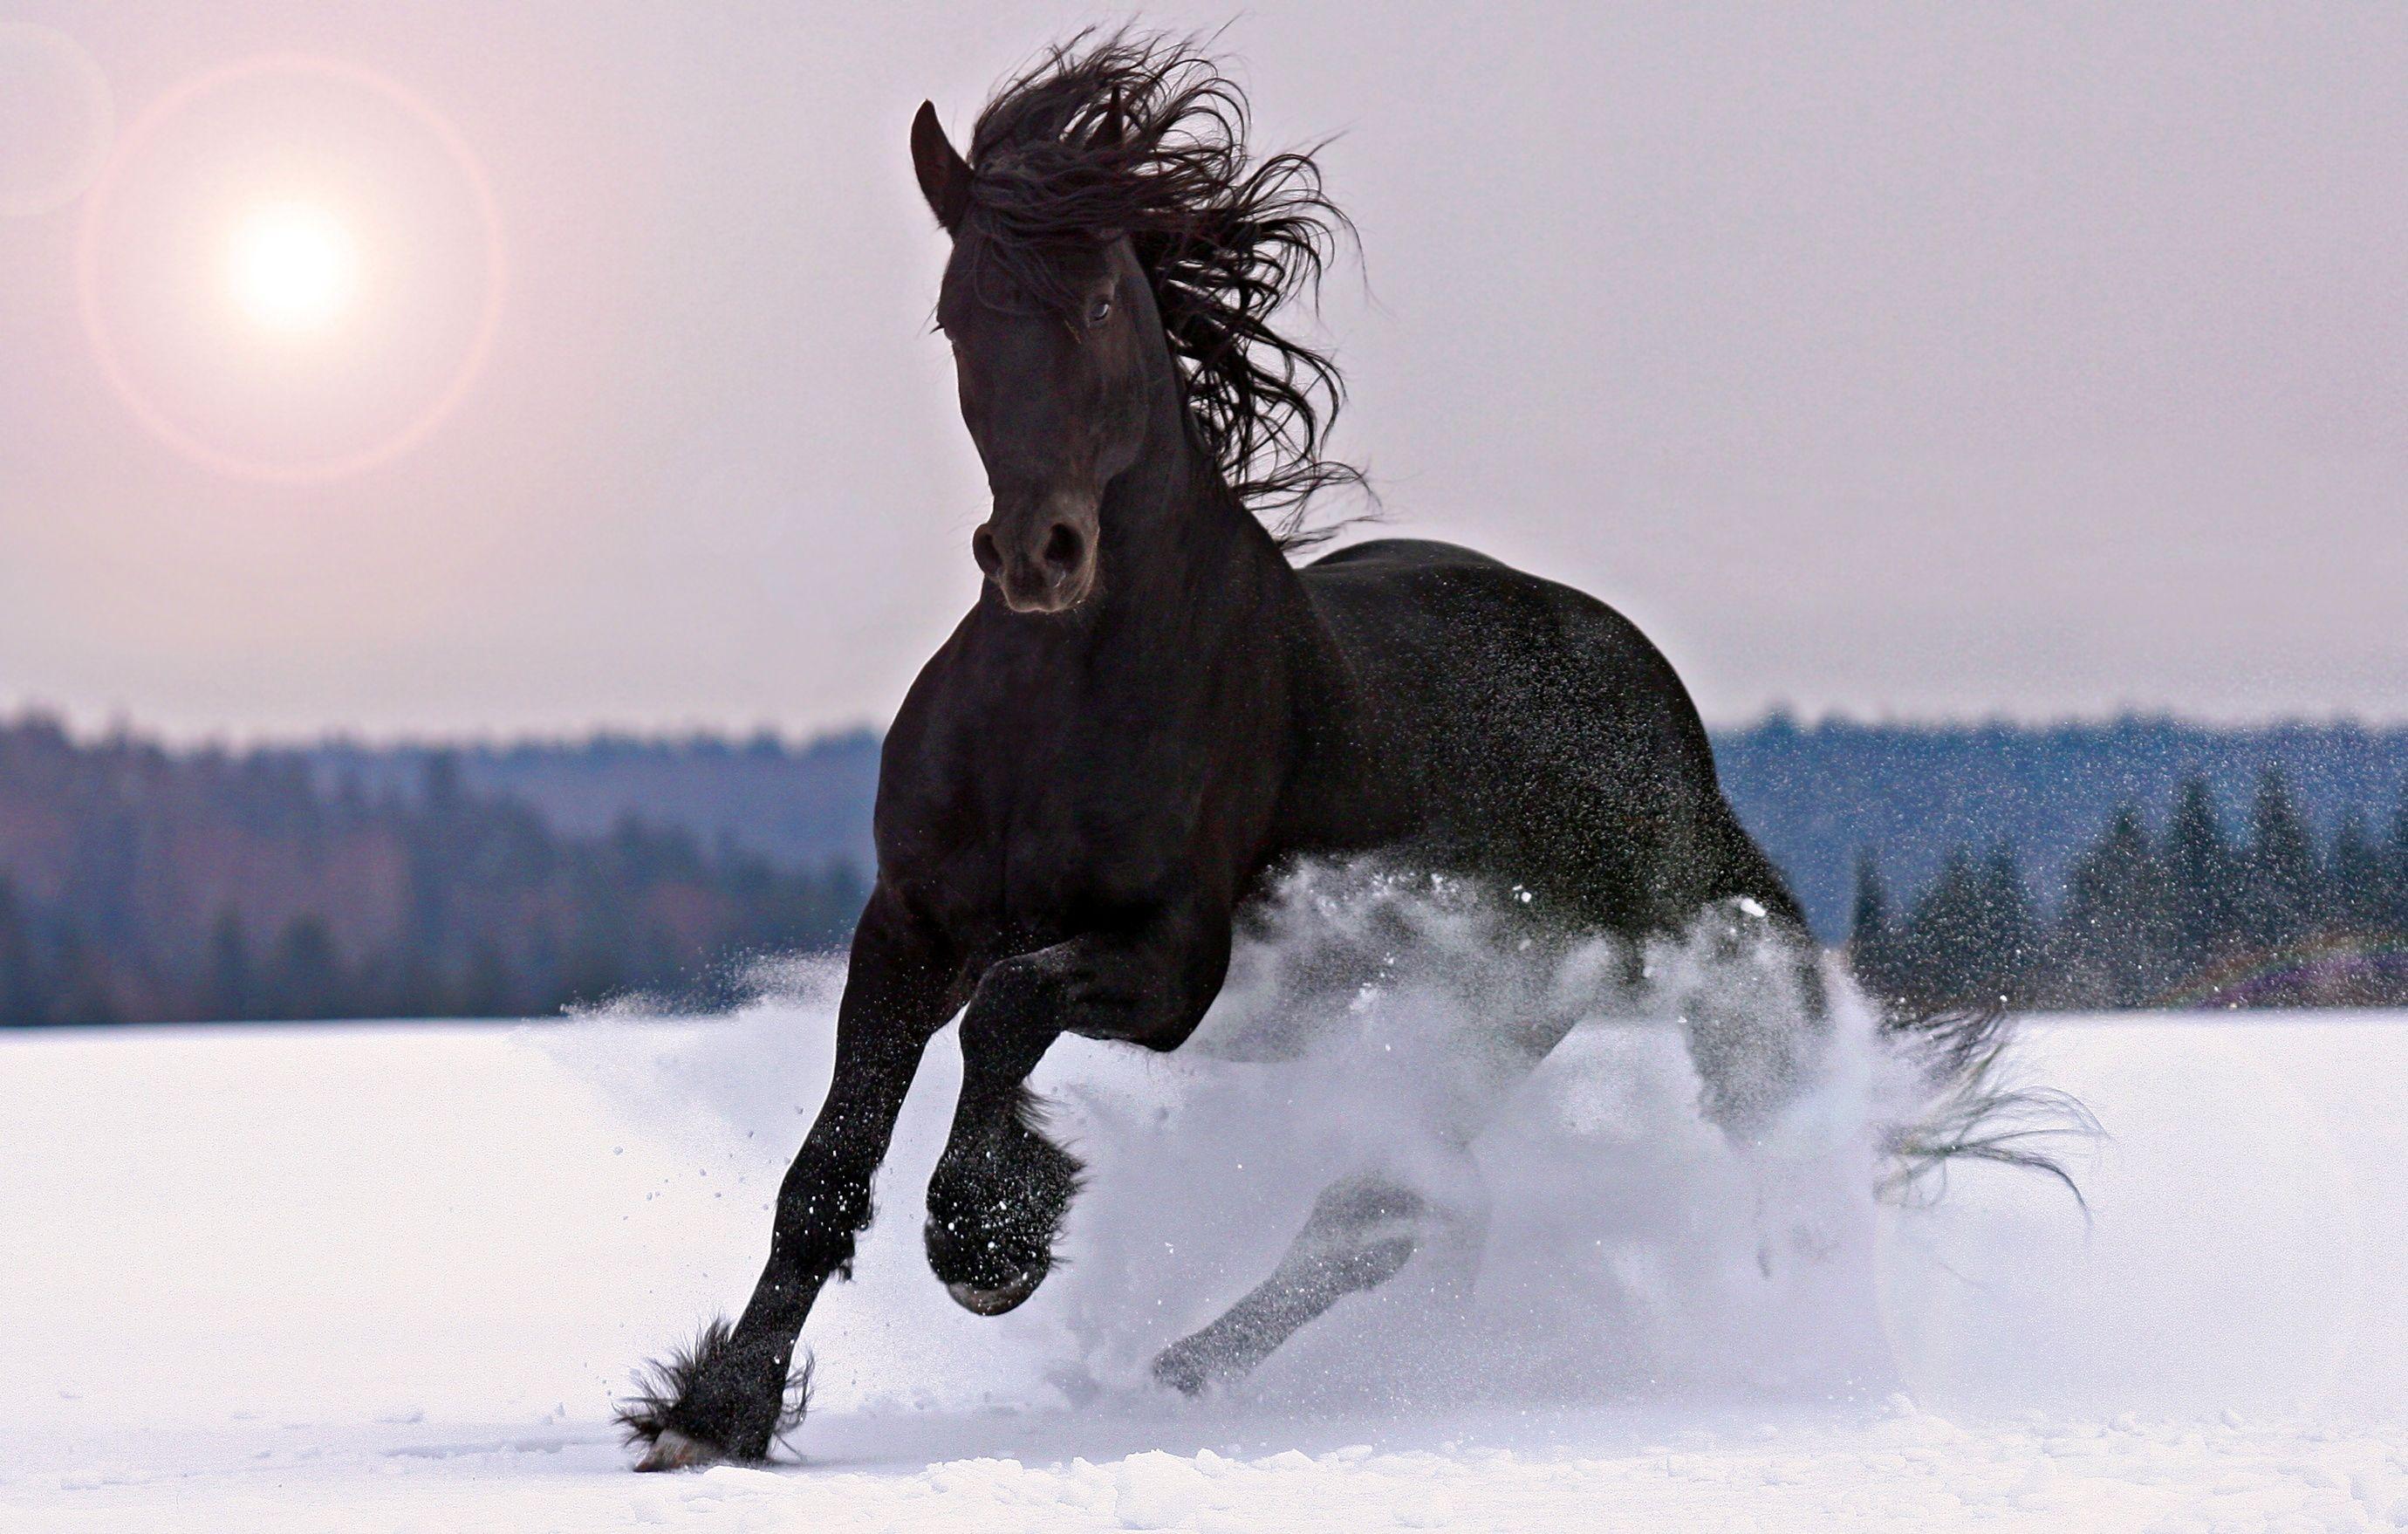 35+ Best Black Horse Running Wallpaper Download For Free